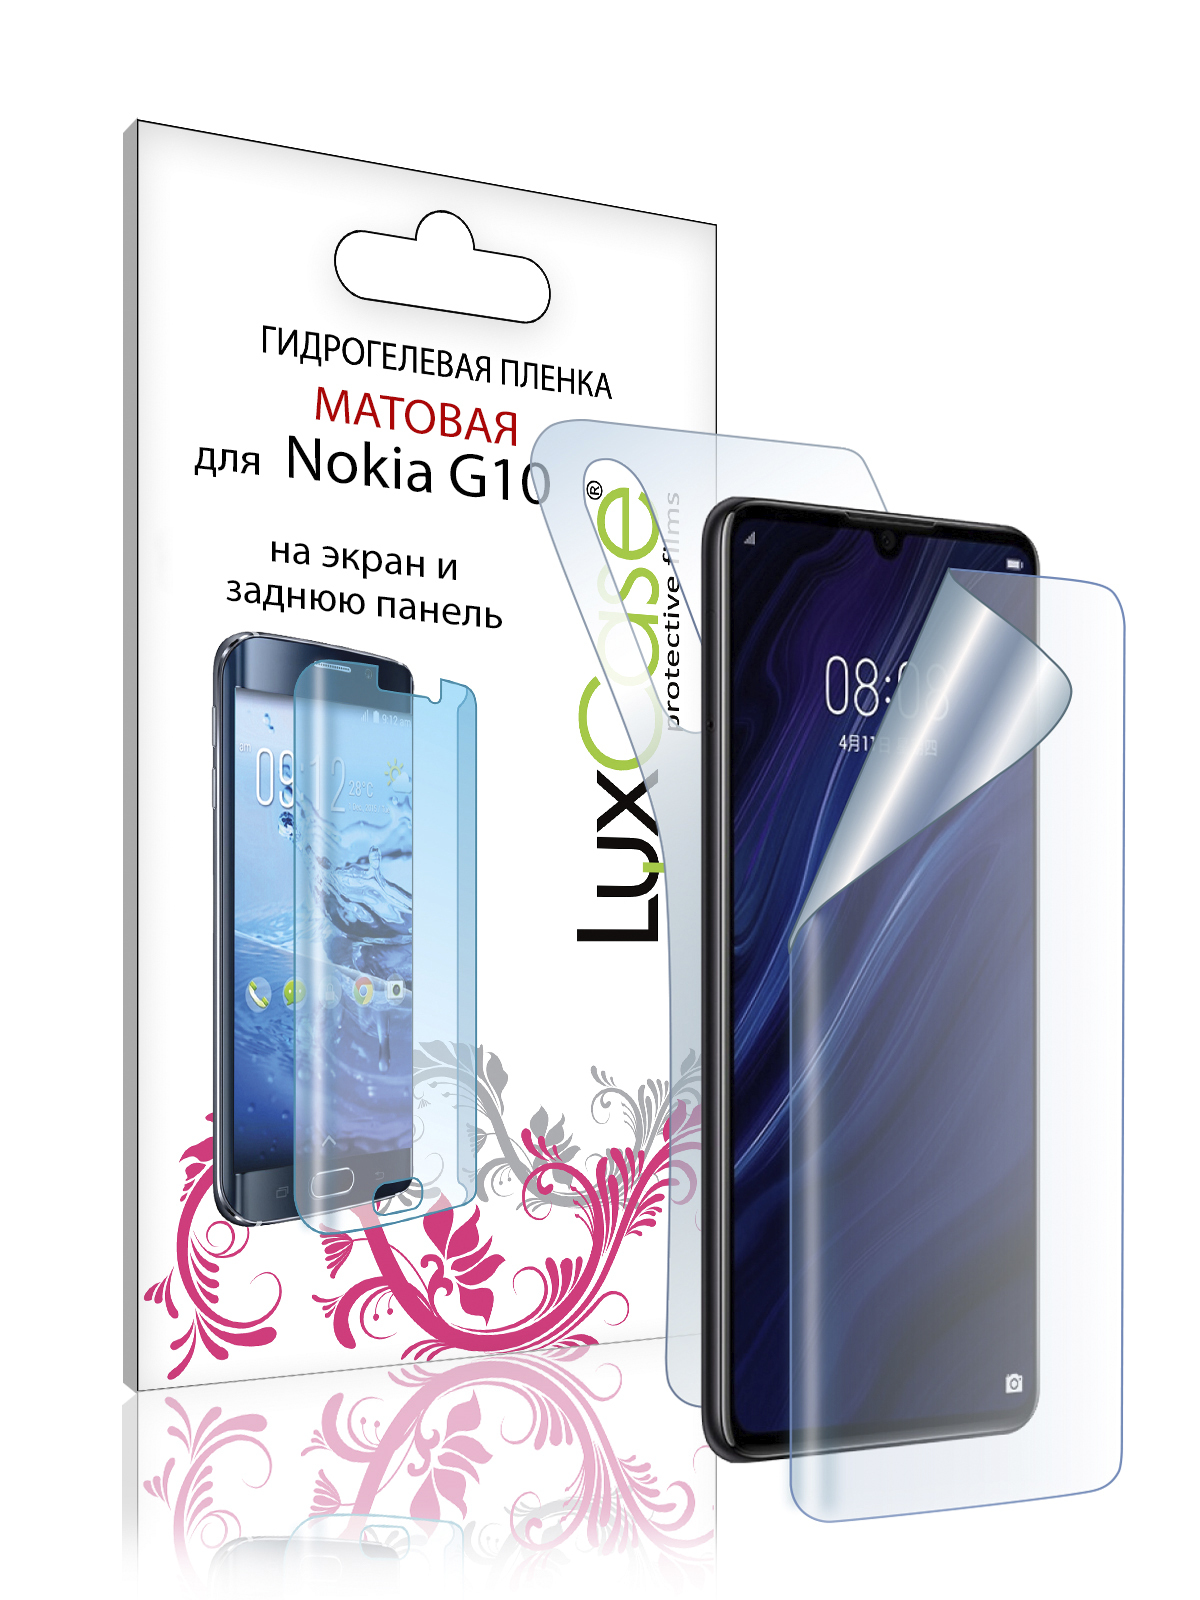 Пленка гидрогелевая LuxCase для Nokia G20 0.14mm Front and Back Matte 86458 пленка гидрогелевая luxcase для nokia g20 0 14mm front and back matte 86458